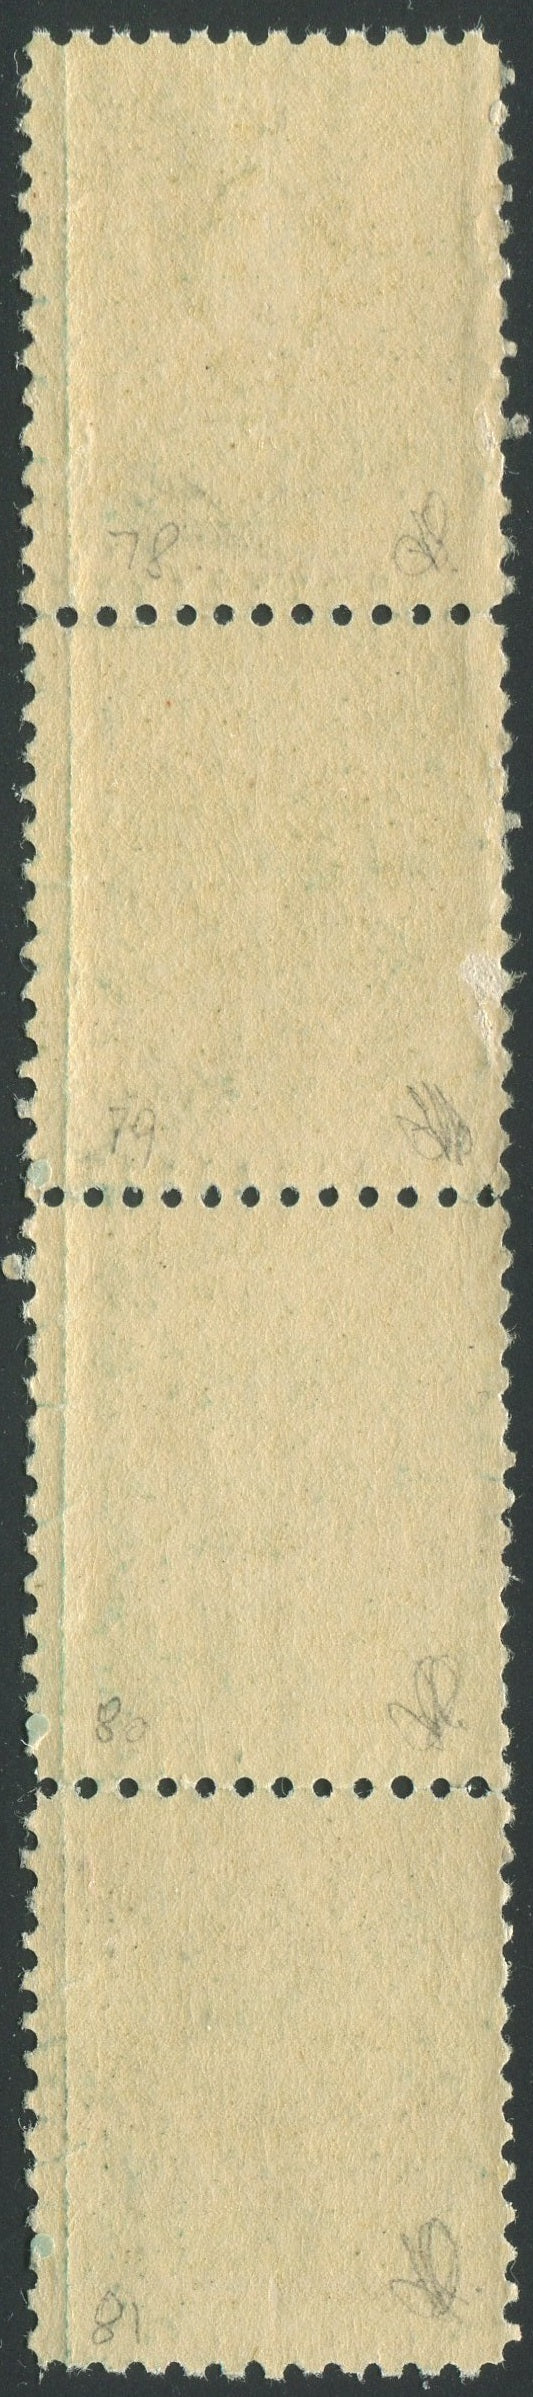 0089CA1810 - Canada #89xxxii - Mint Experimental Coil Strip of 4